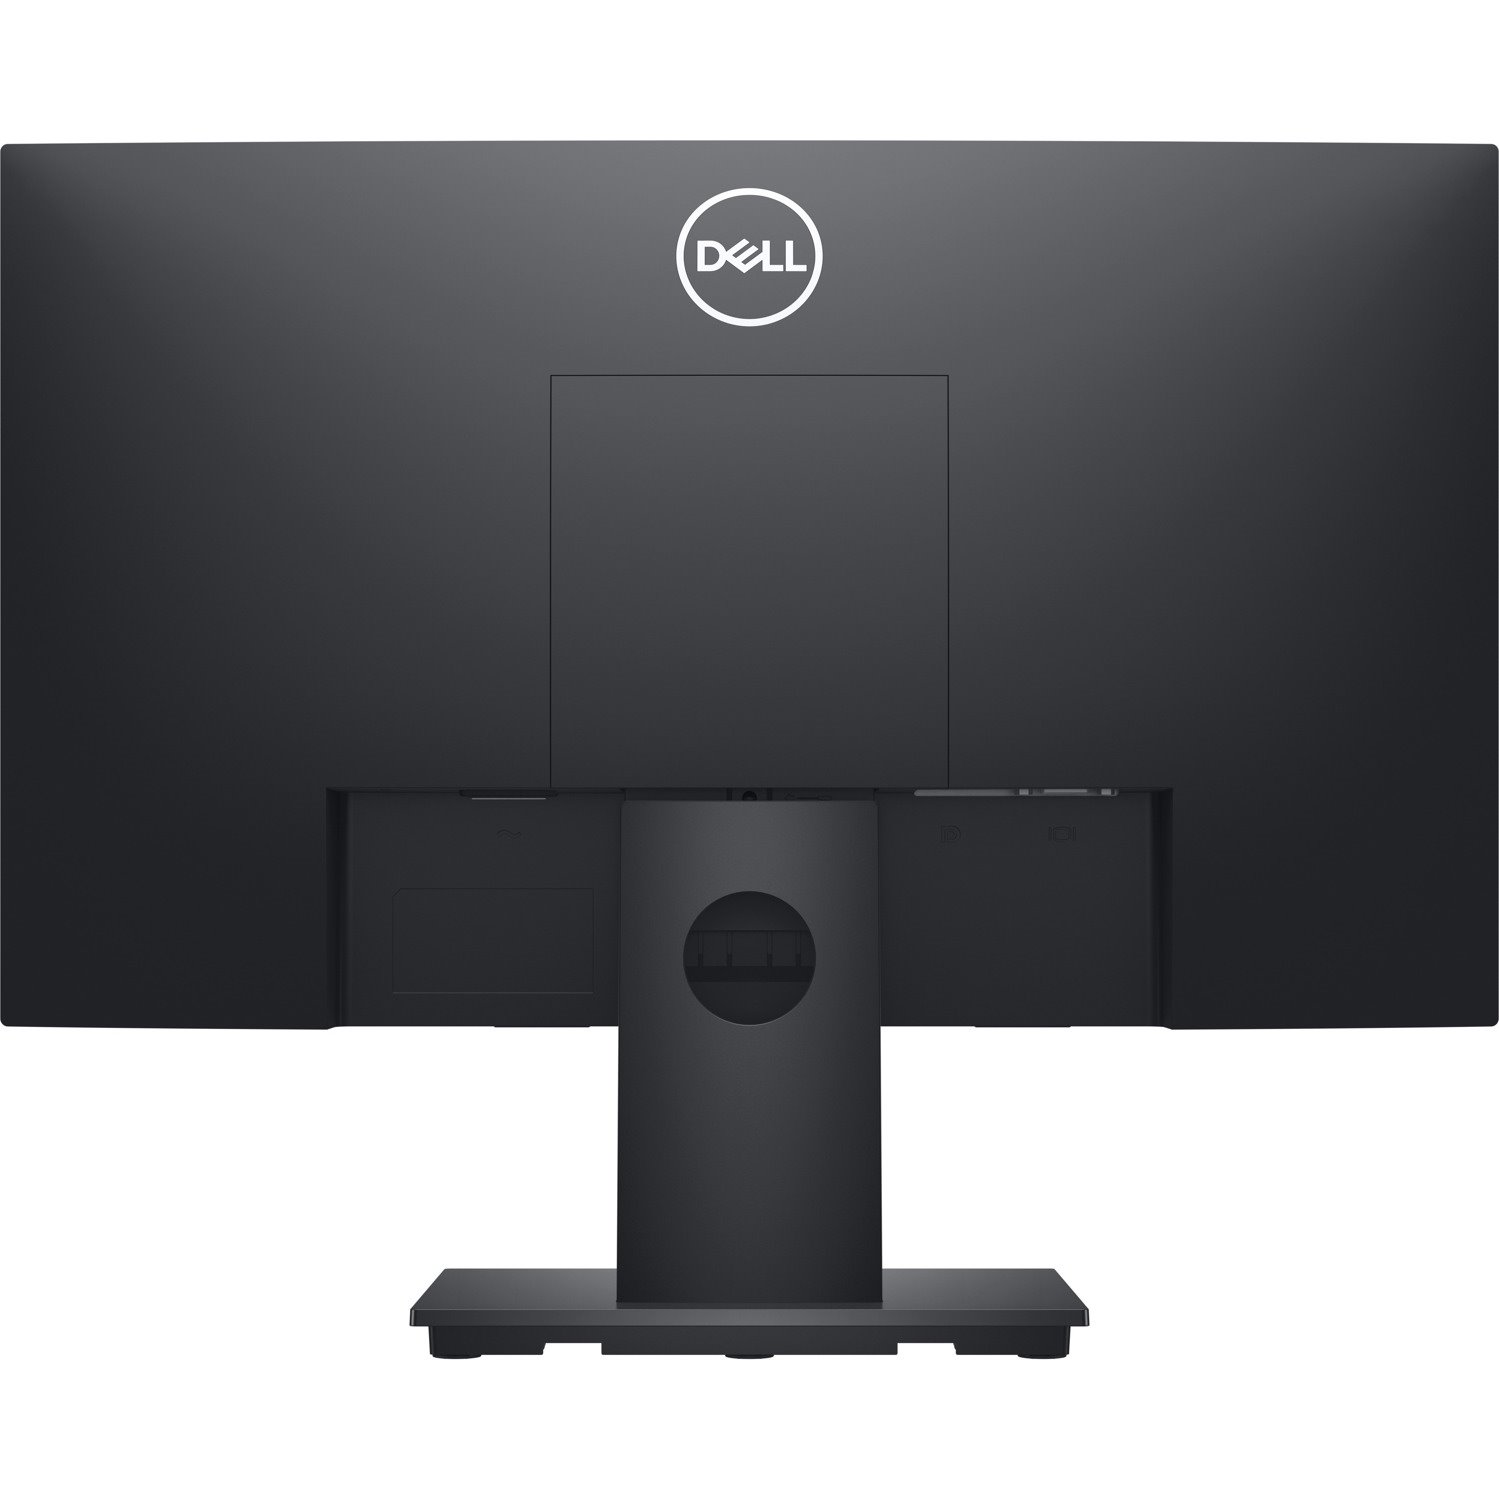 Dell E2020H 19.5" LED LCD Monitor - 16:9 - Black